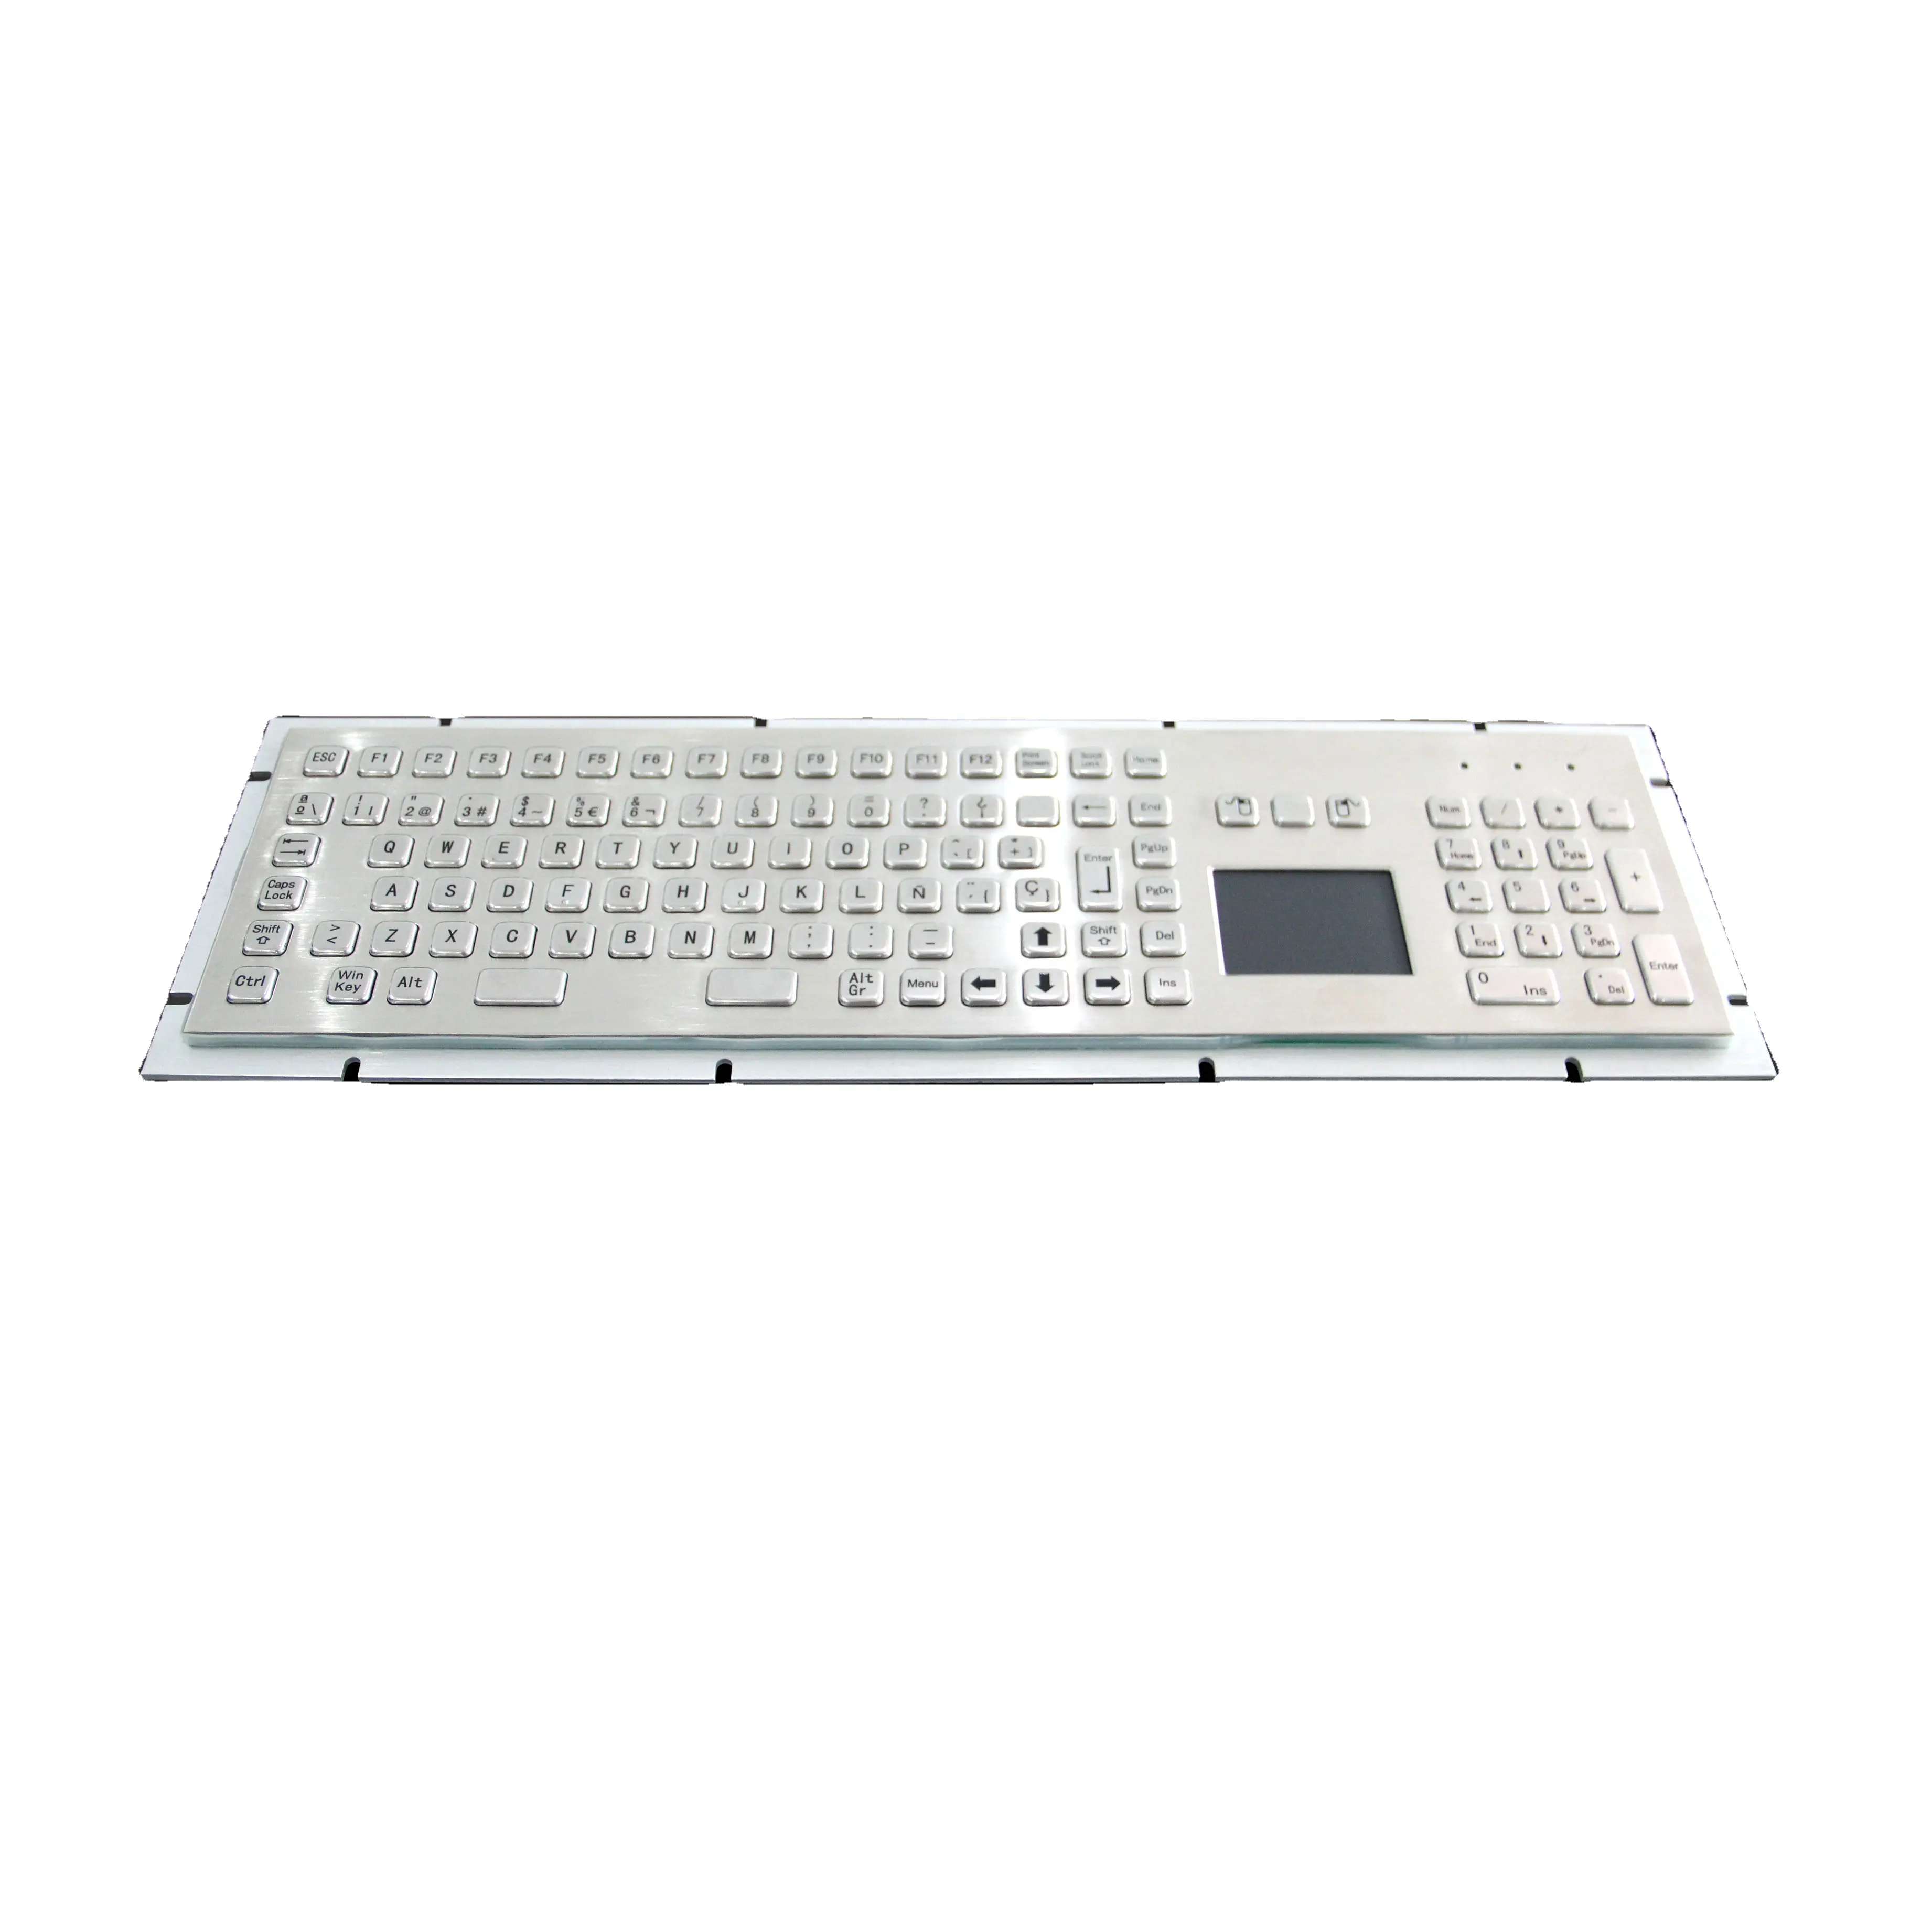 IP65 IK07 anti-vandal touchpad and numeric keypad industrial metal keyboard